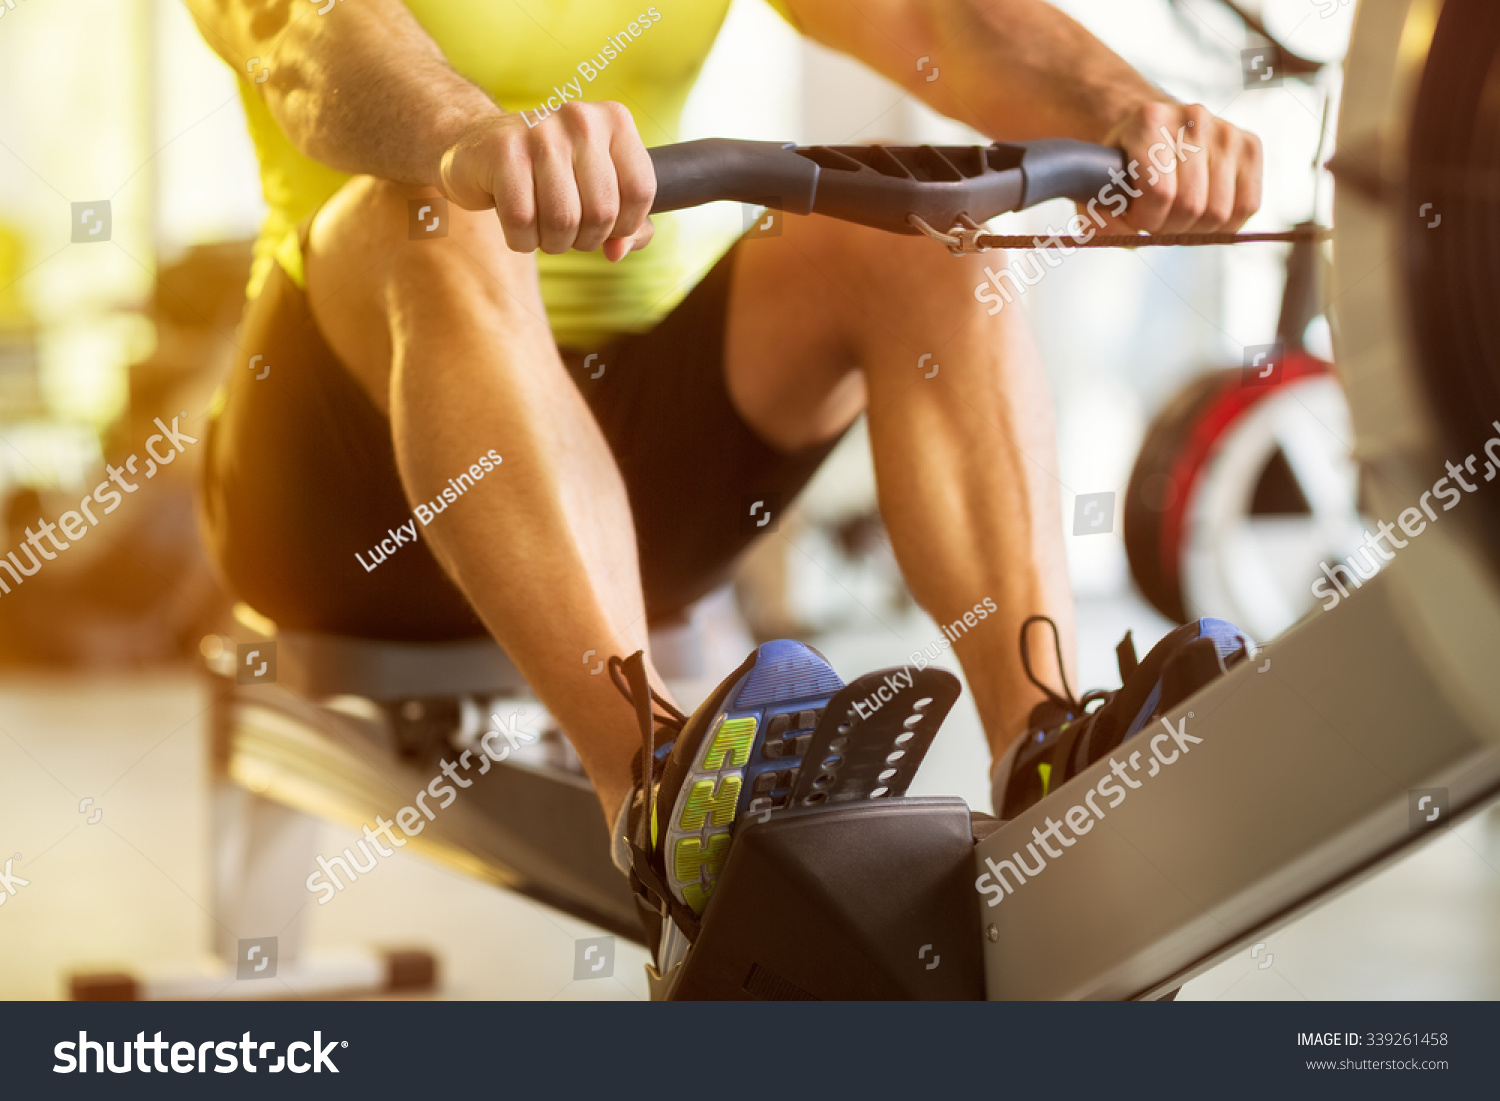 Fit man training on row machine in gym #339261458